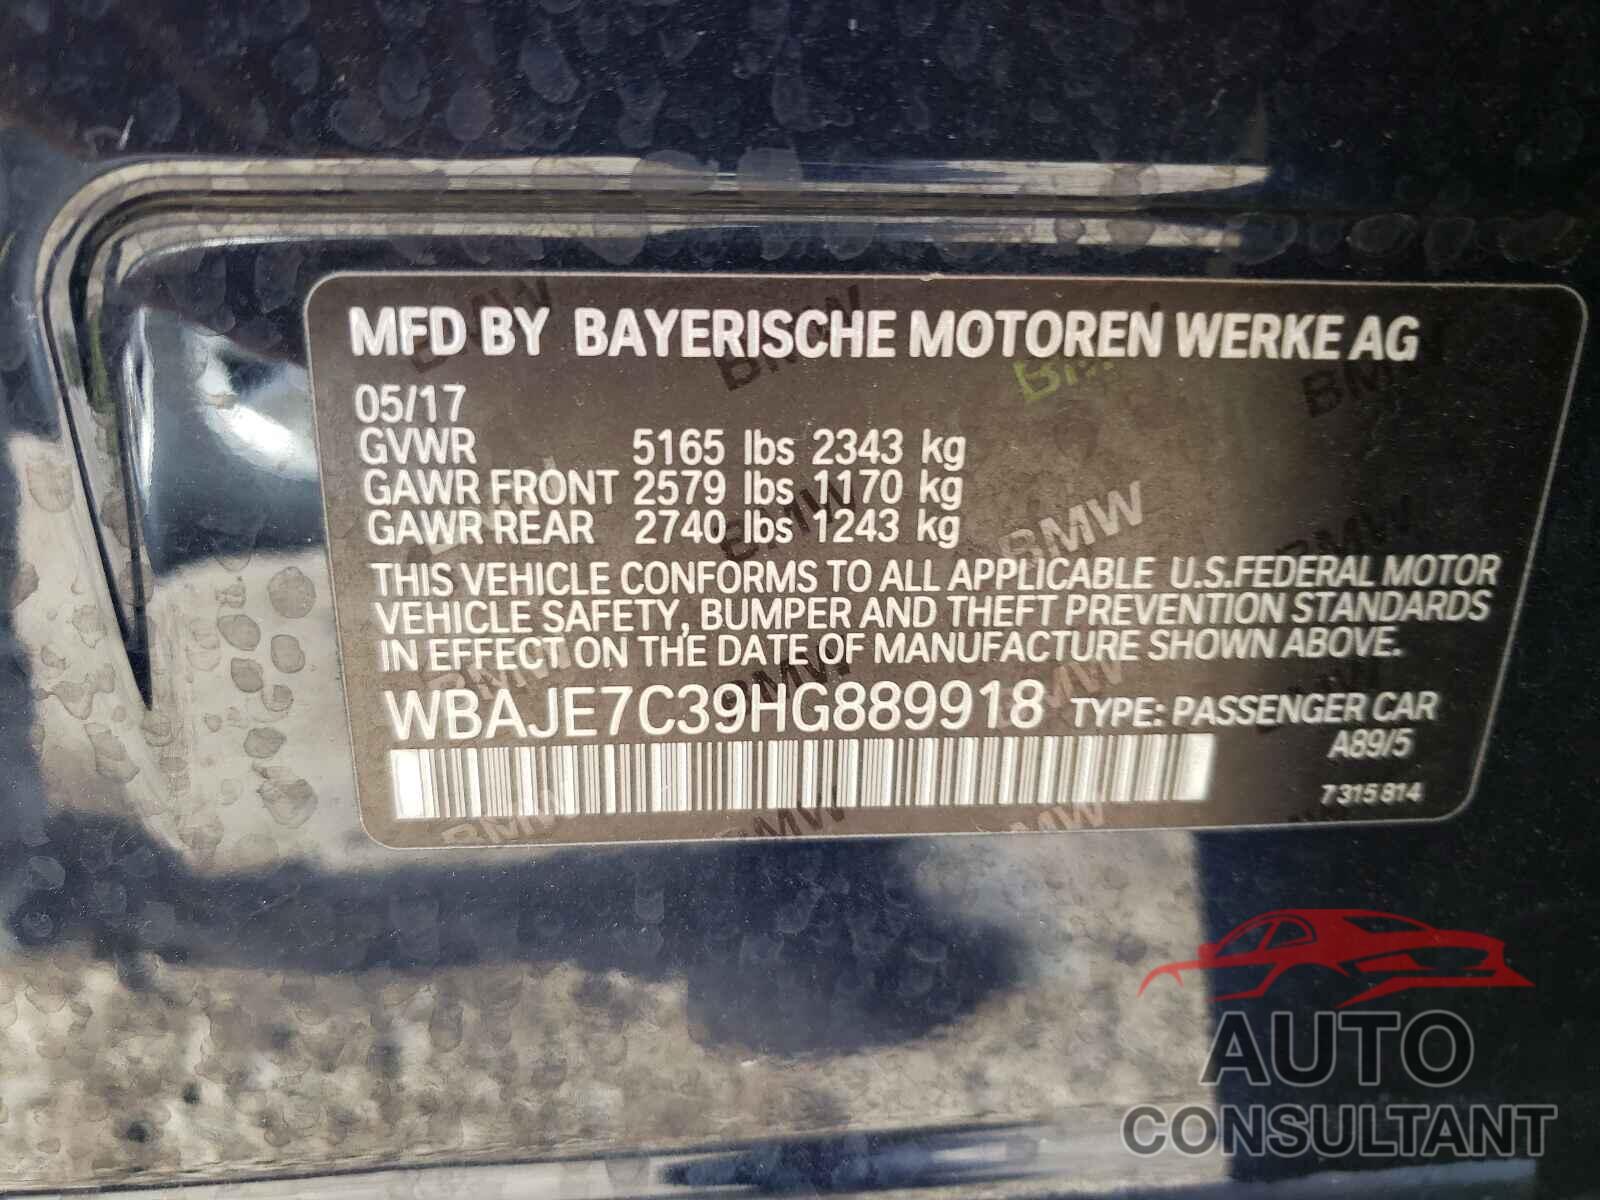 BMW 5 SERIES 2017 - WBAJE7C39HG889918